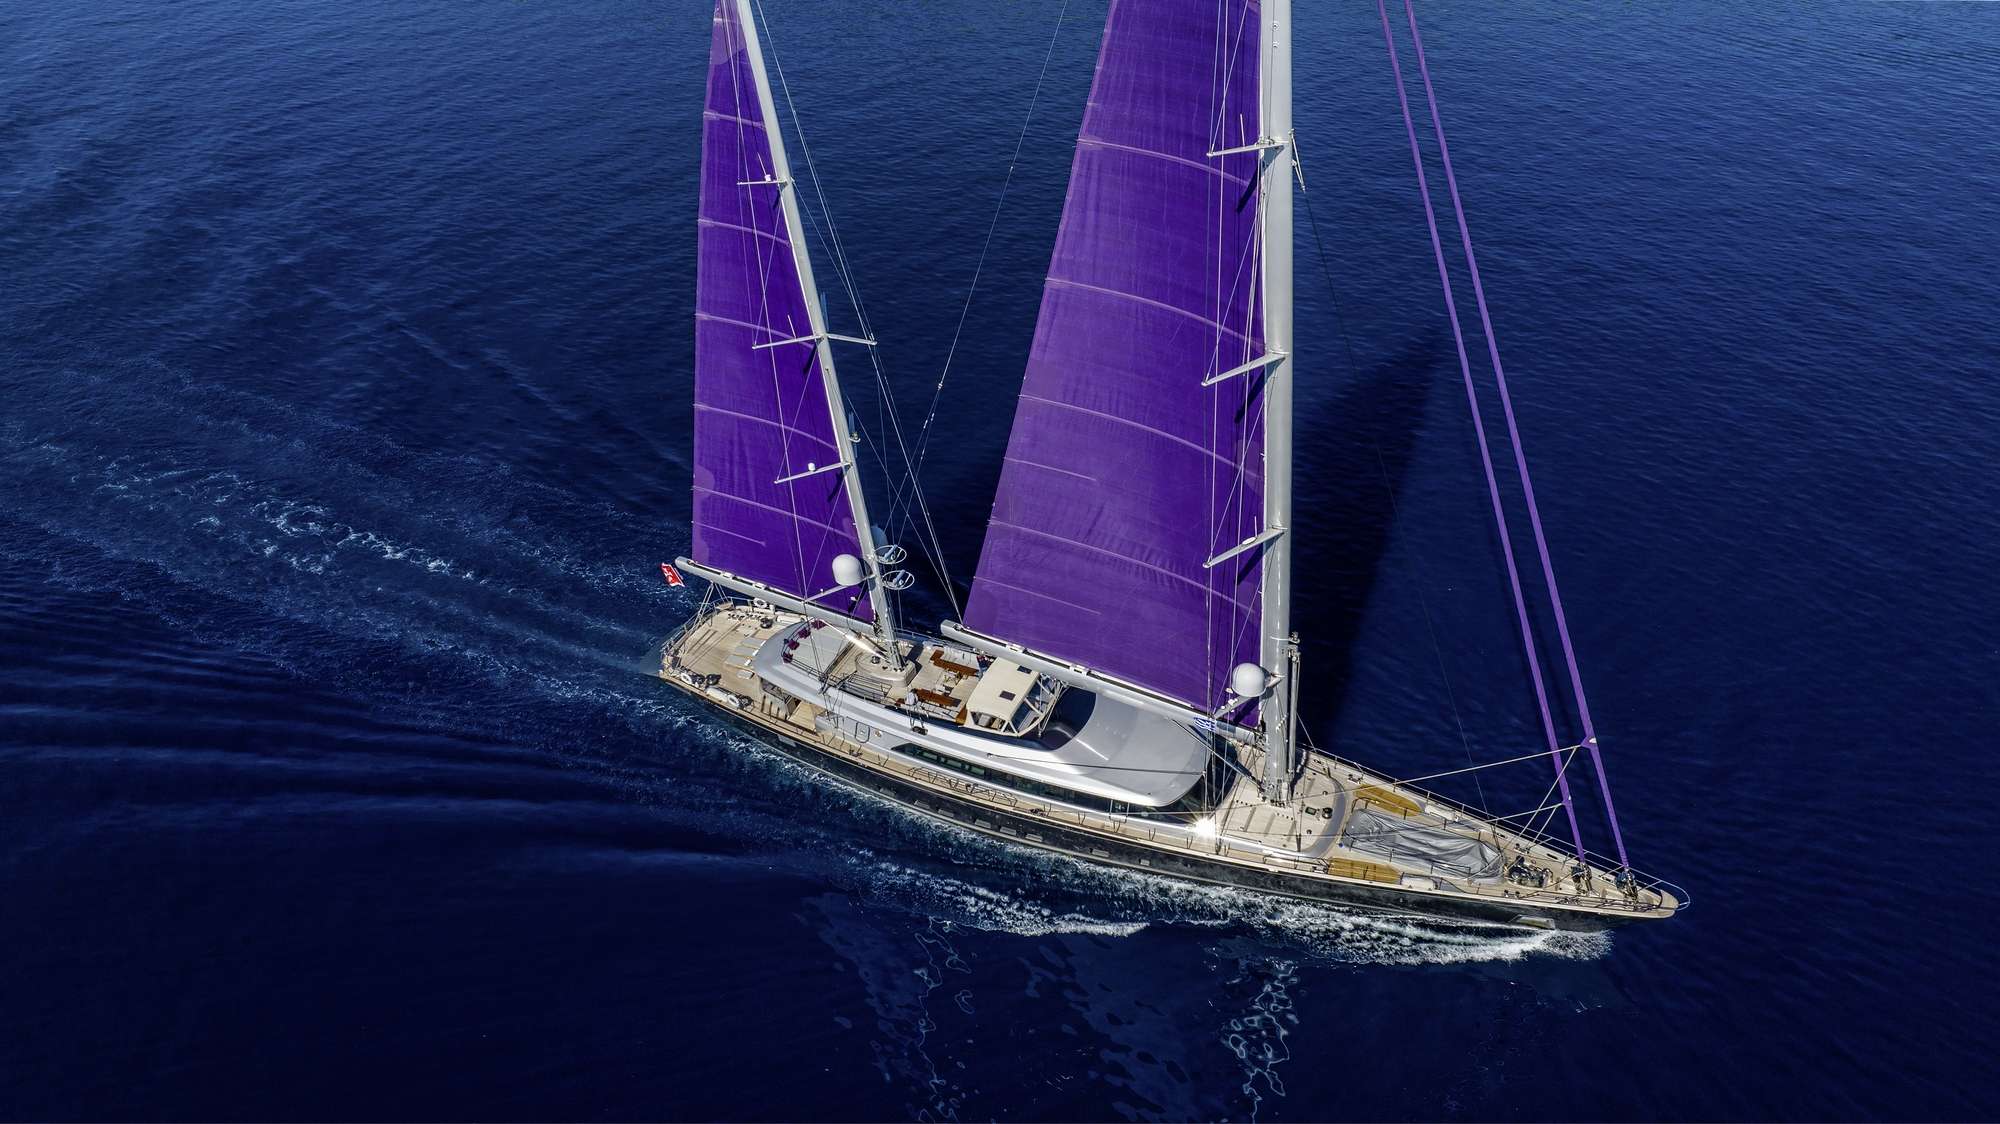 baracuda valletta - Yacht Charter Slovenia & Boat hire in East Mediterranean 2